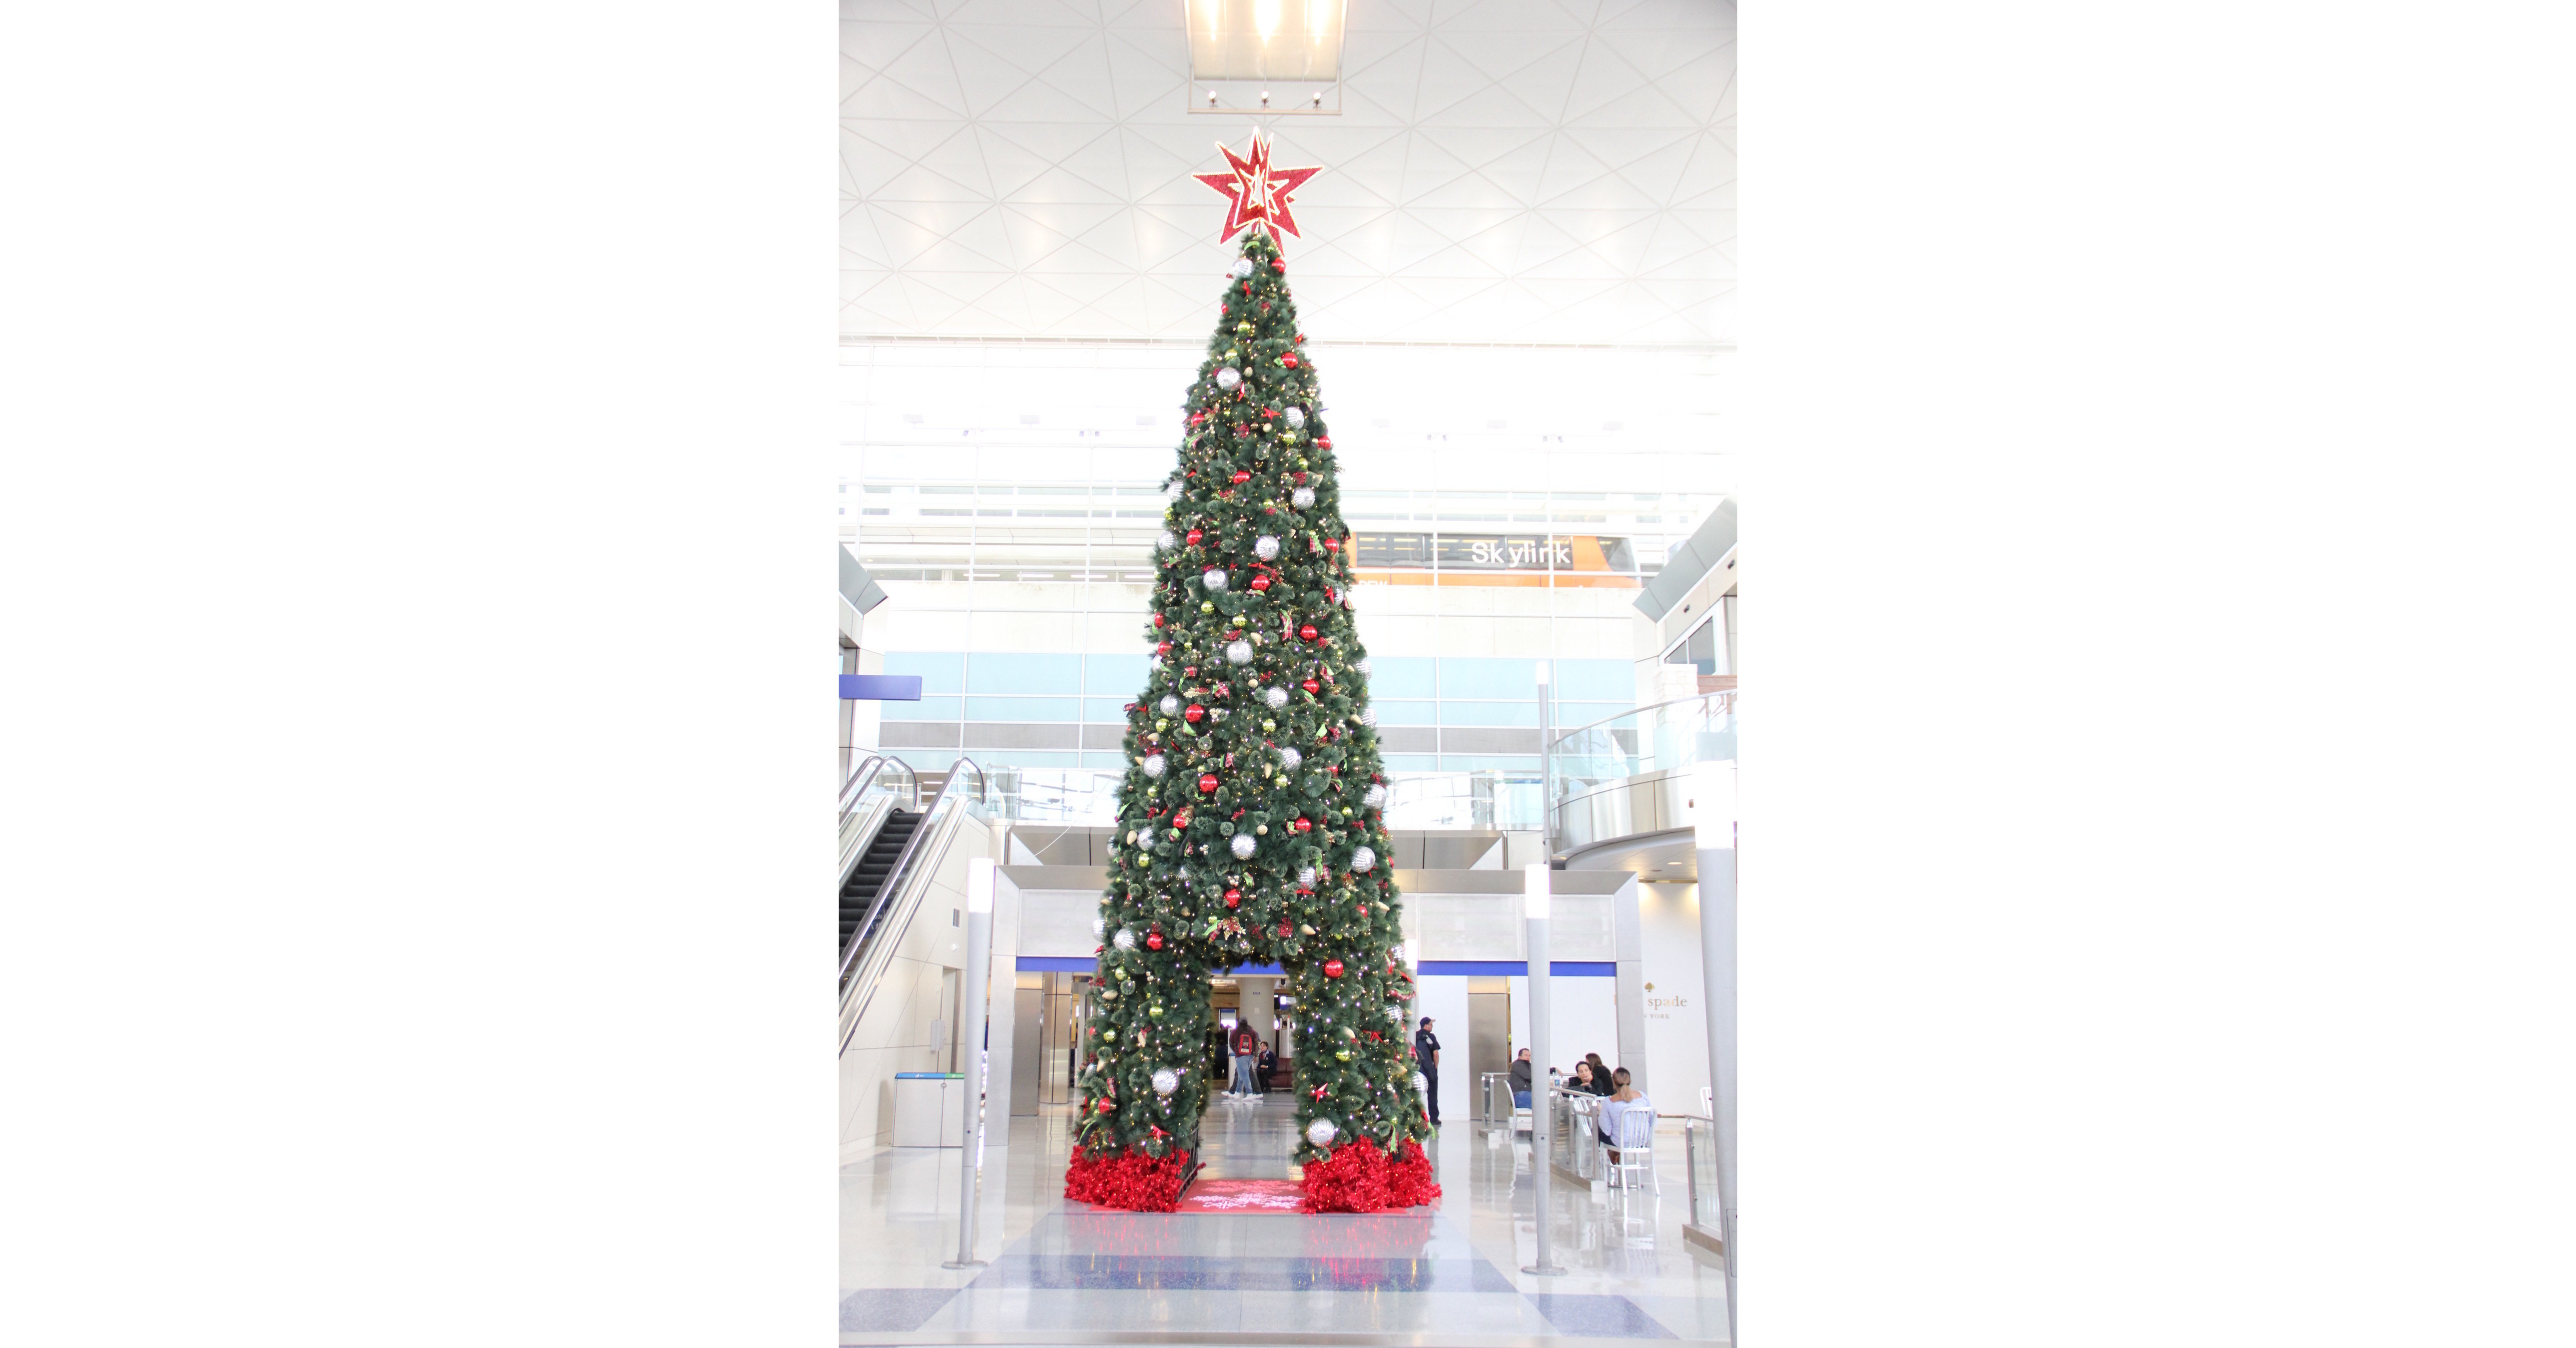 Dallas Fort Worth International Airport Kicks Off Holiday Travel Season